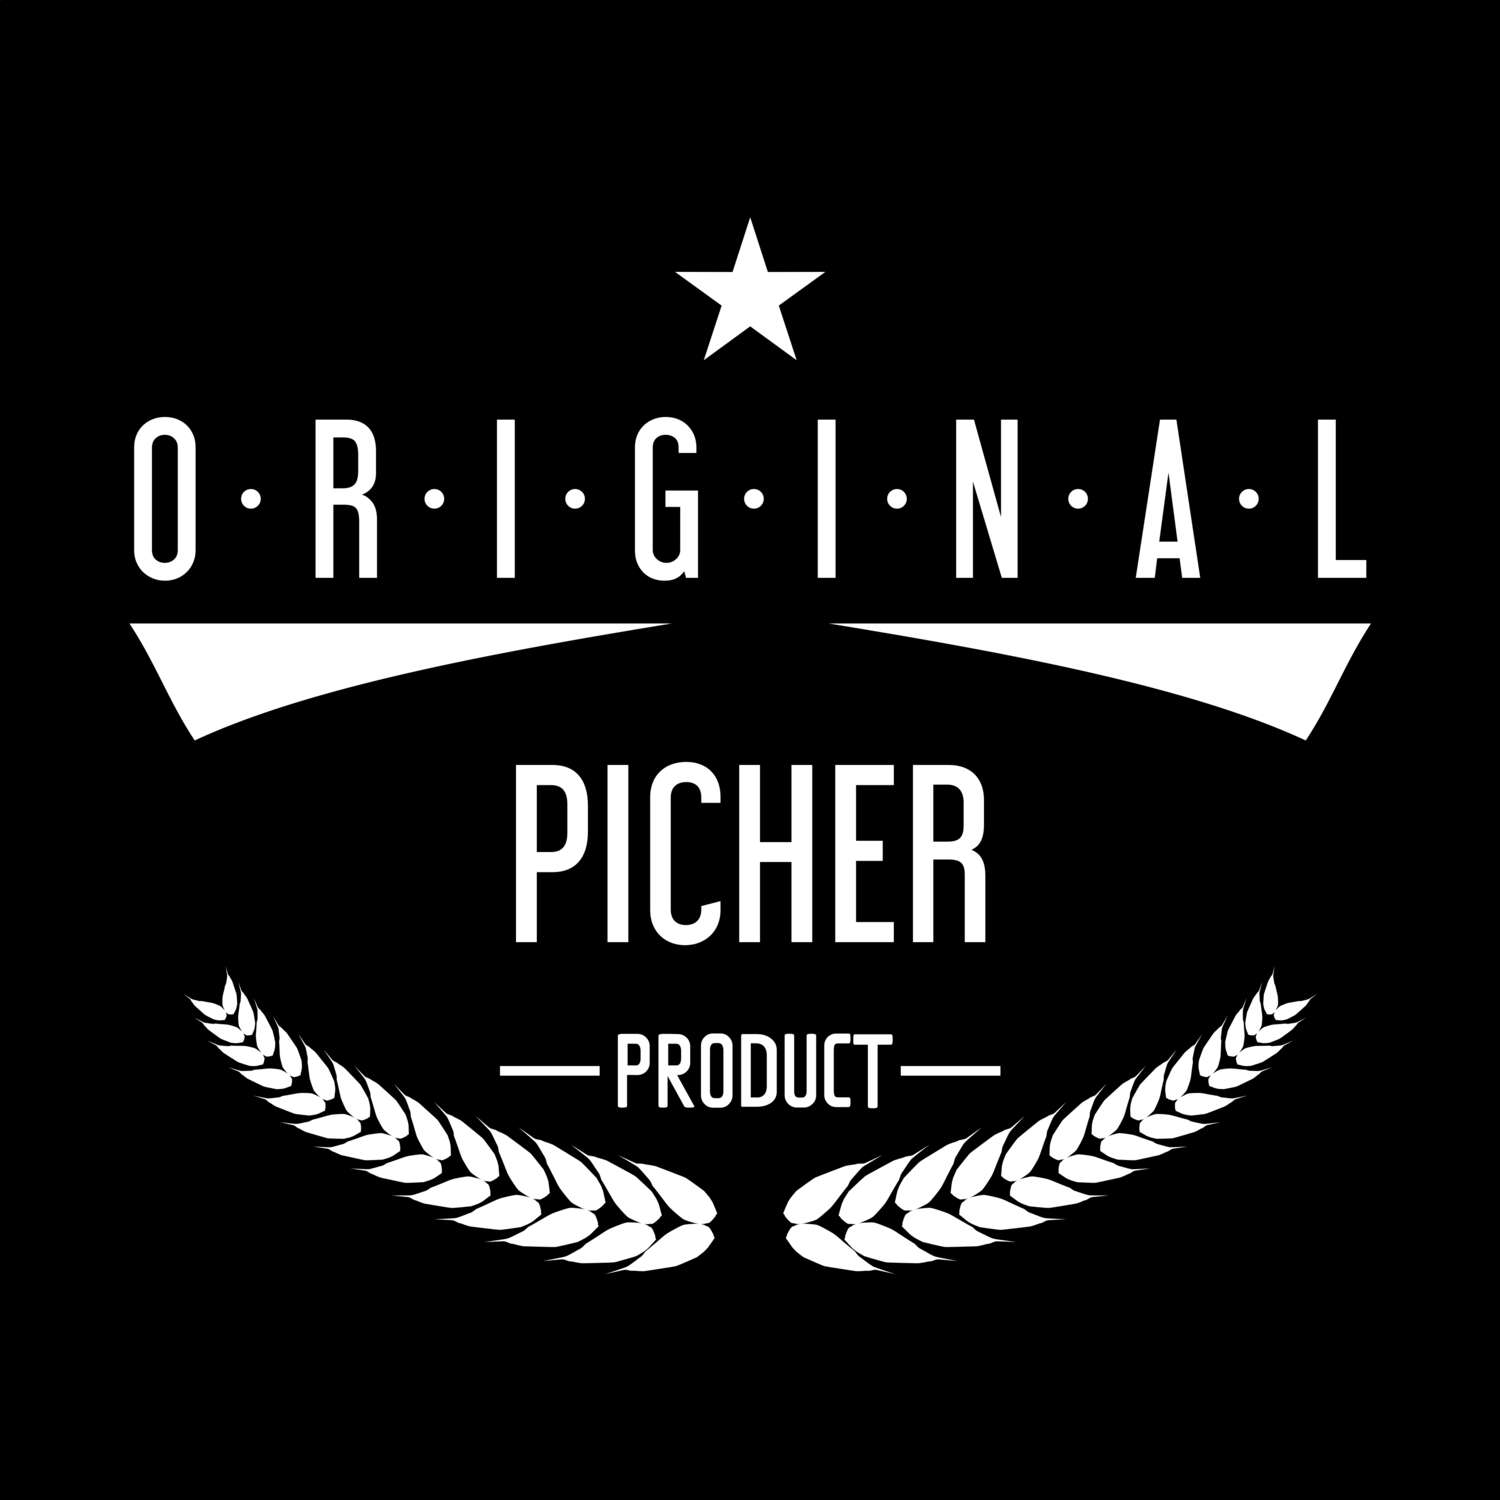 Picher T-Shirt »Original Product«